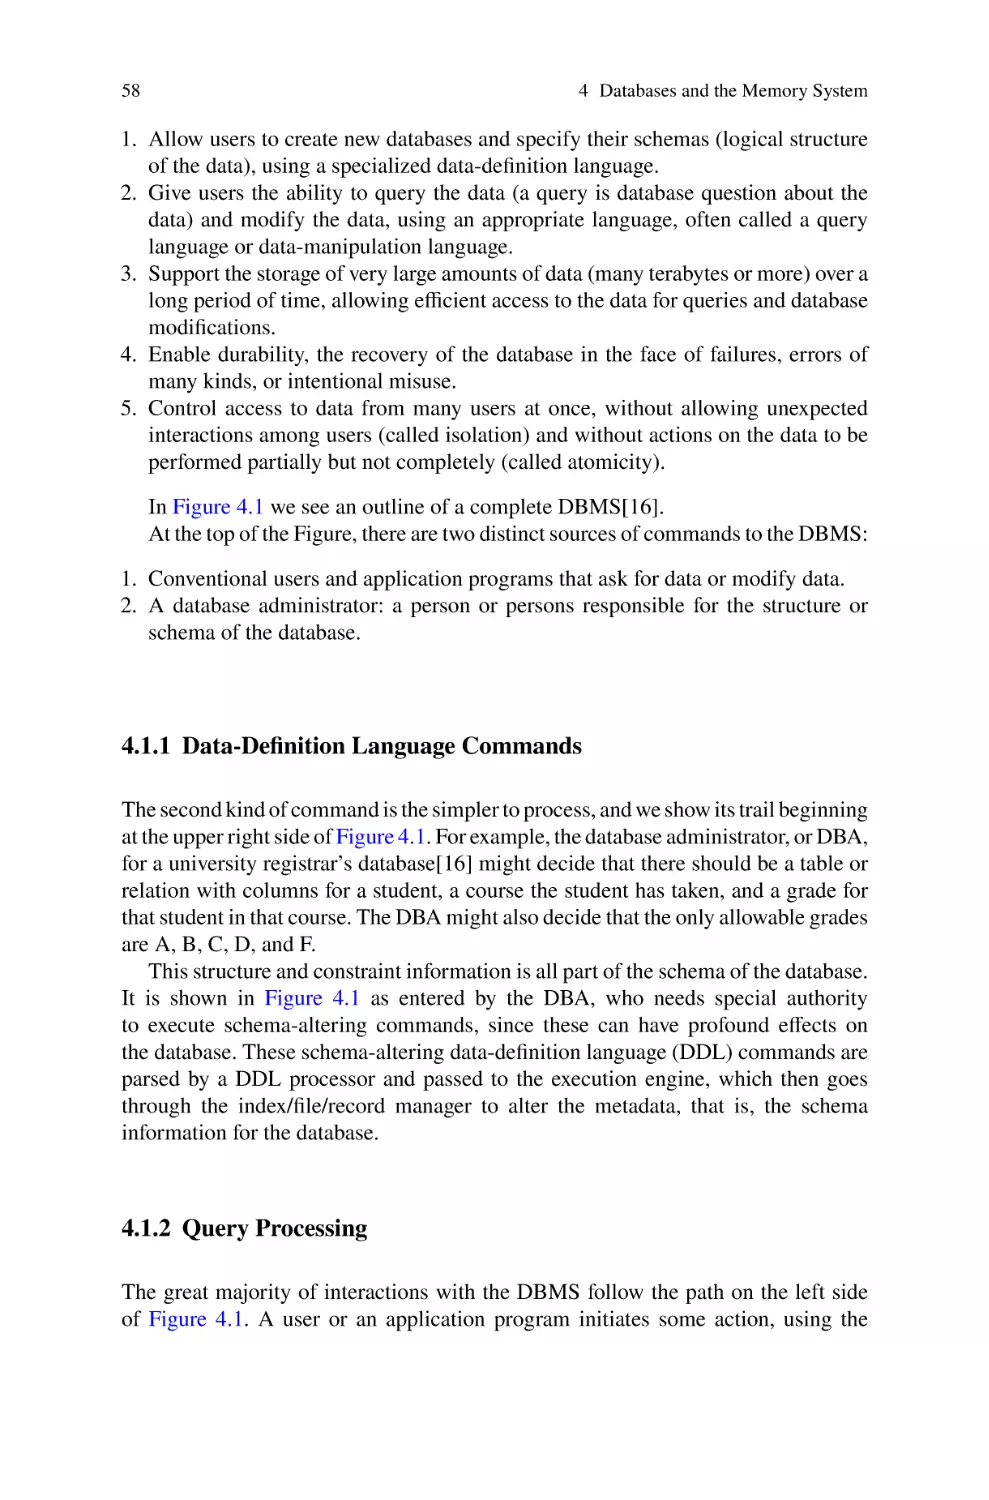 4.1.1 Data-Definition Language Commands
4.1.2 Query Processing